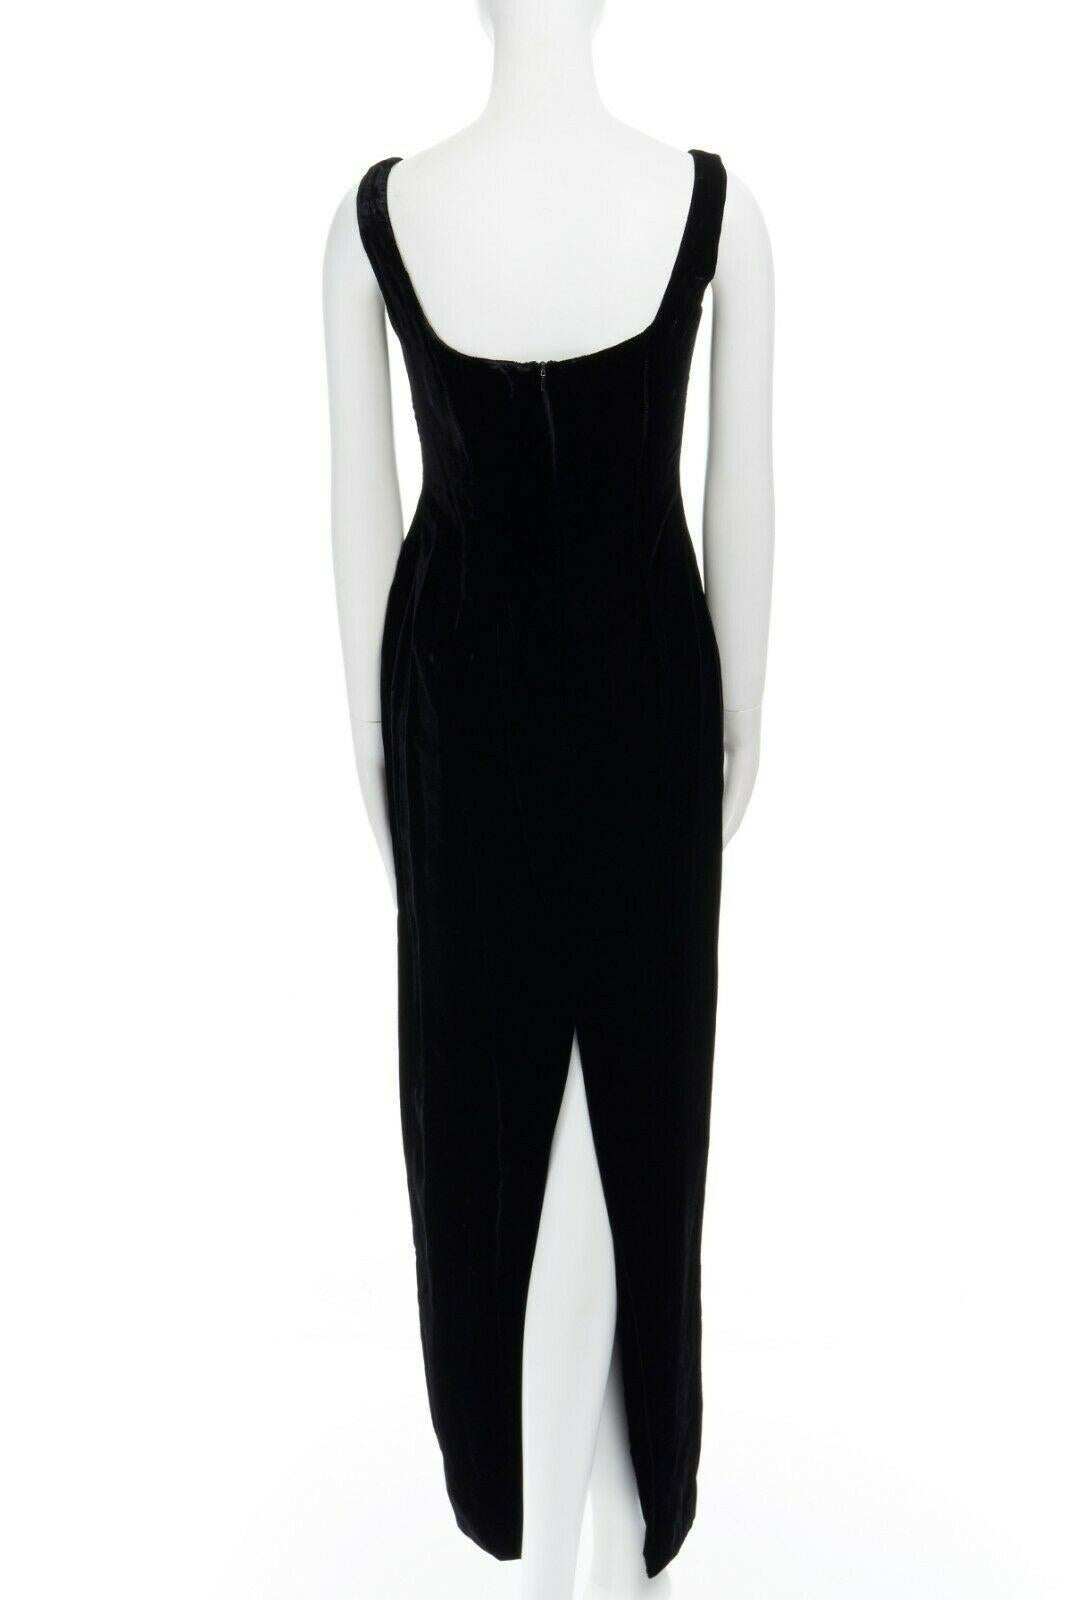 DAVID FIELDEN black velvet sequins lace scallop neckline gown dress UK12 US8 M 1